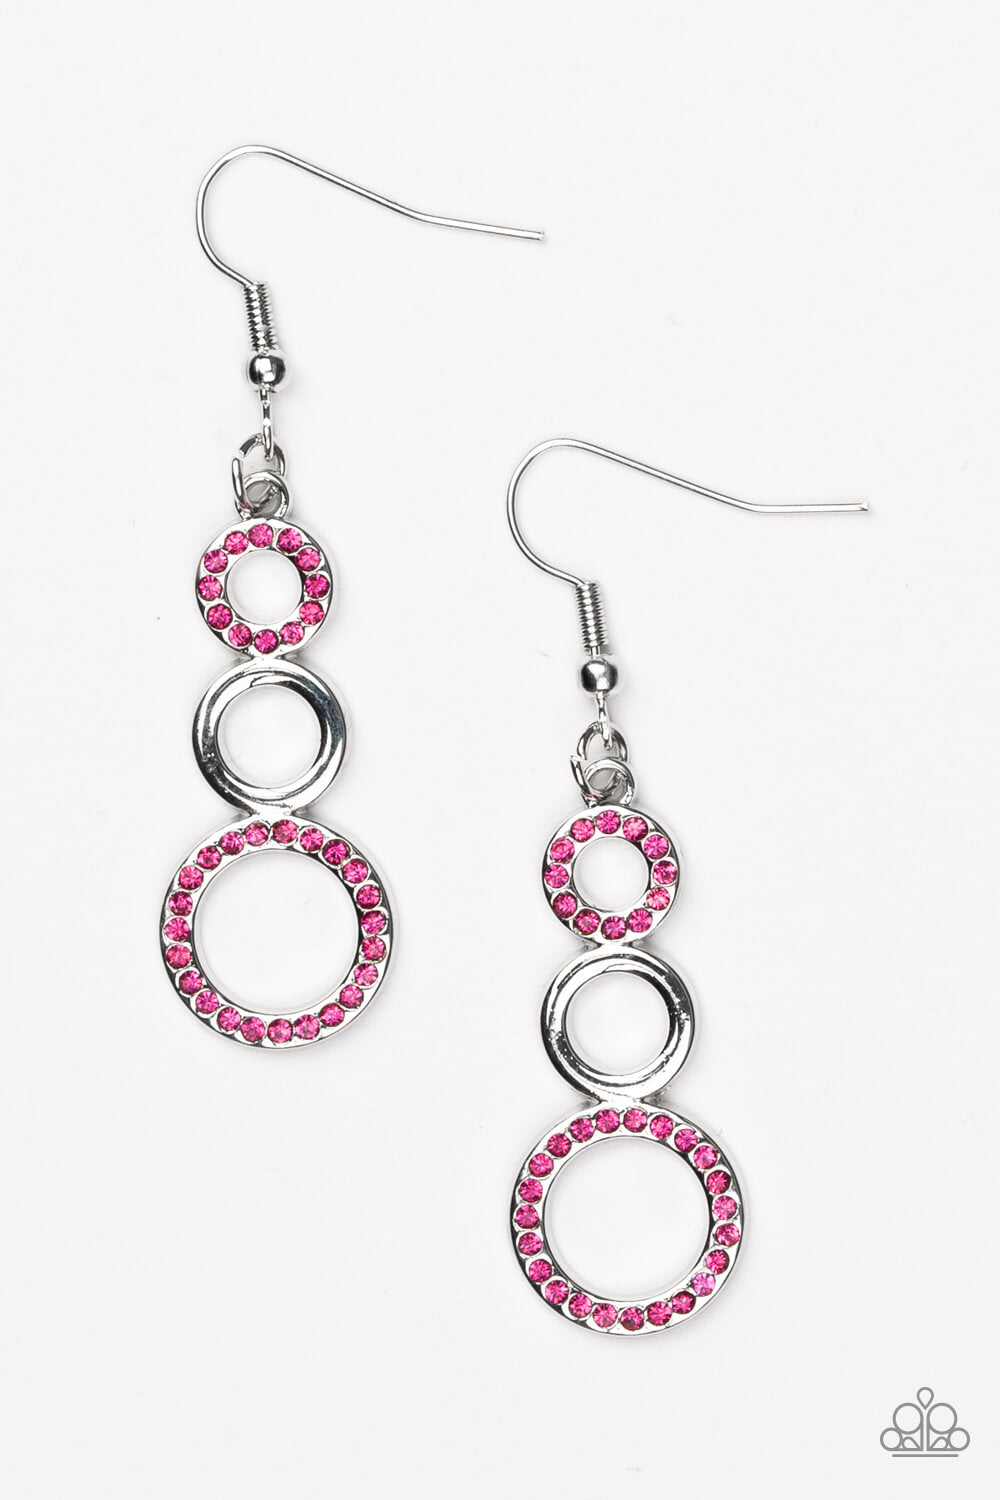 Bubble Bustle Pink Earrings - Princess Glam Shop